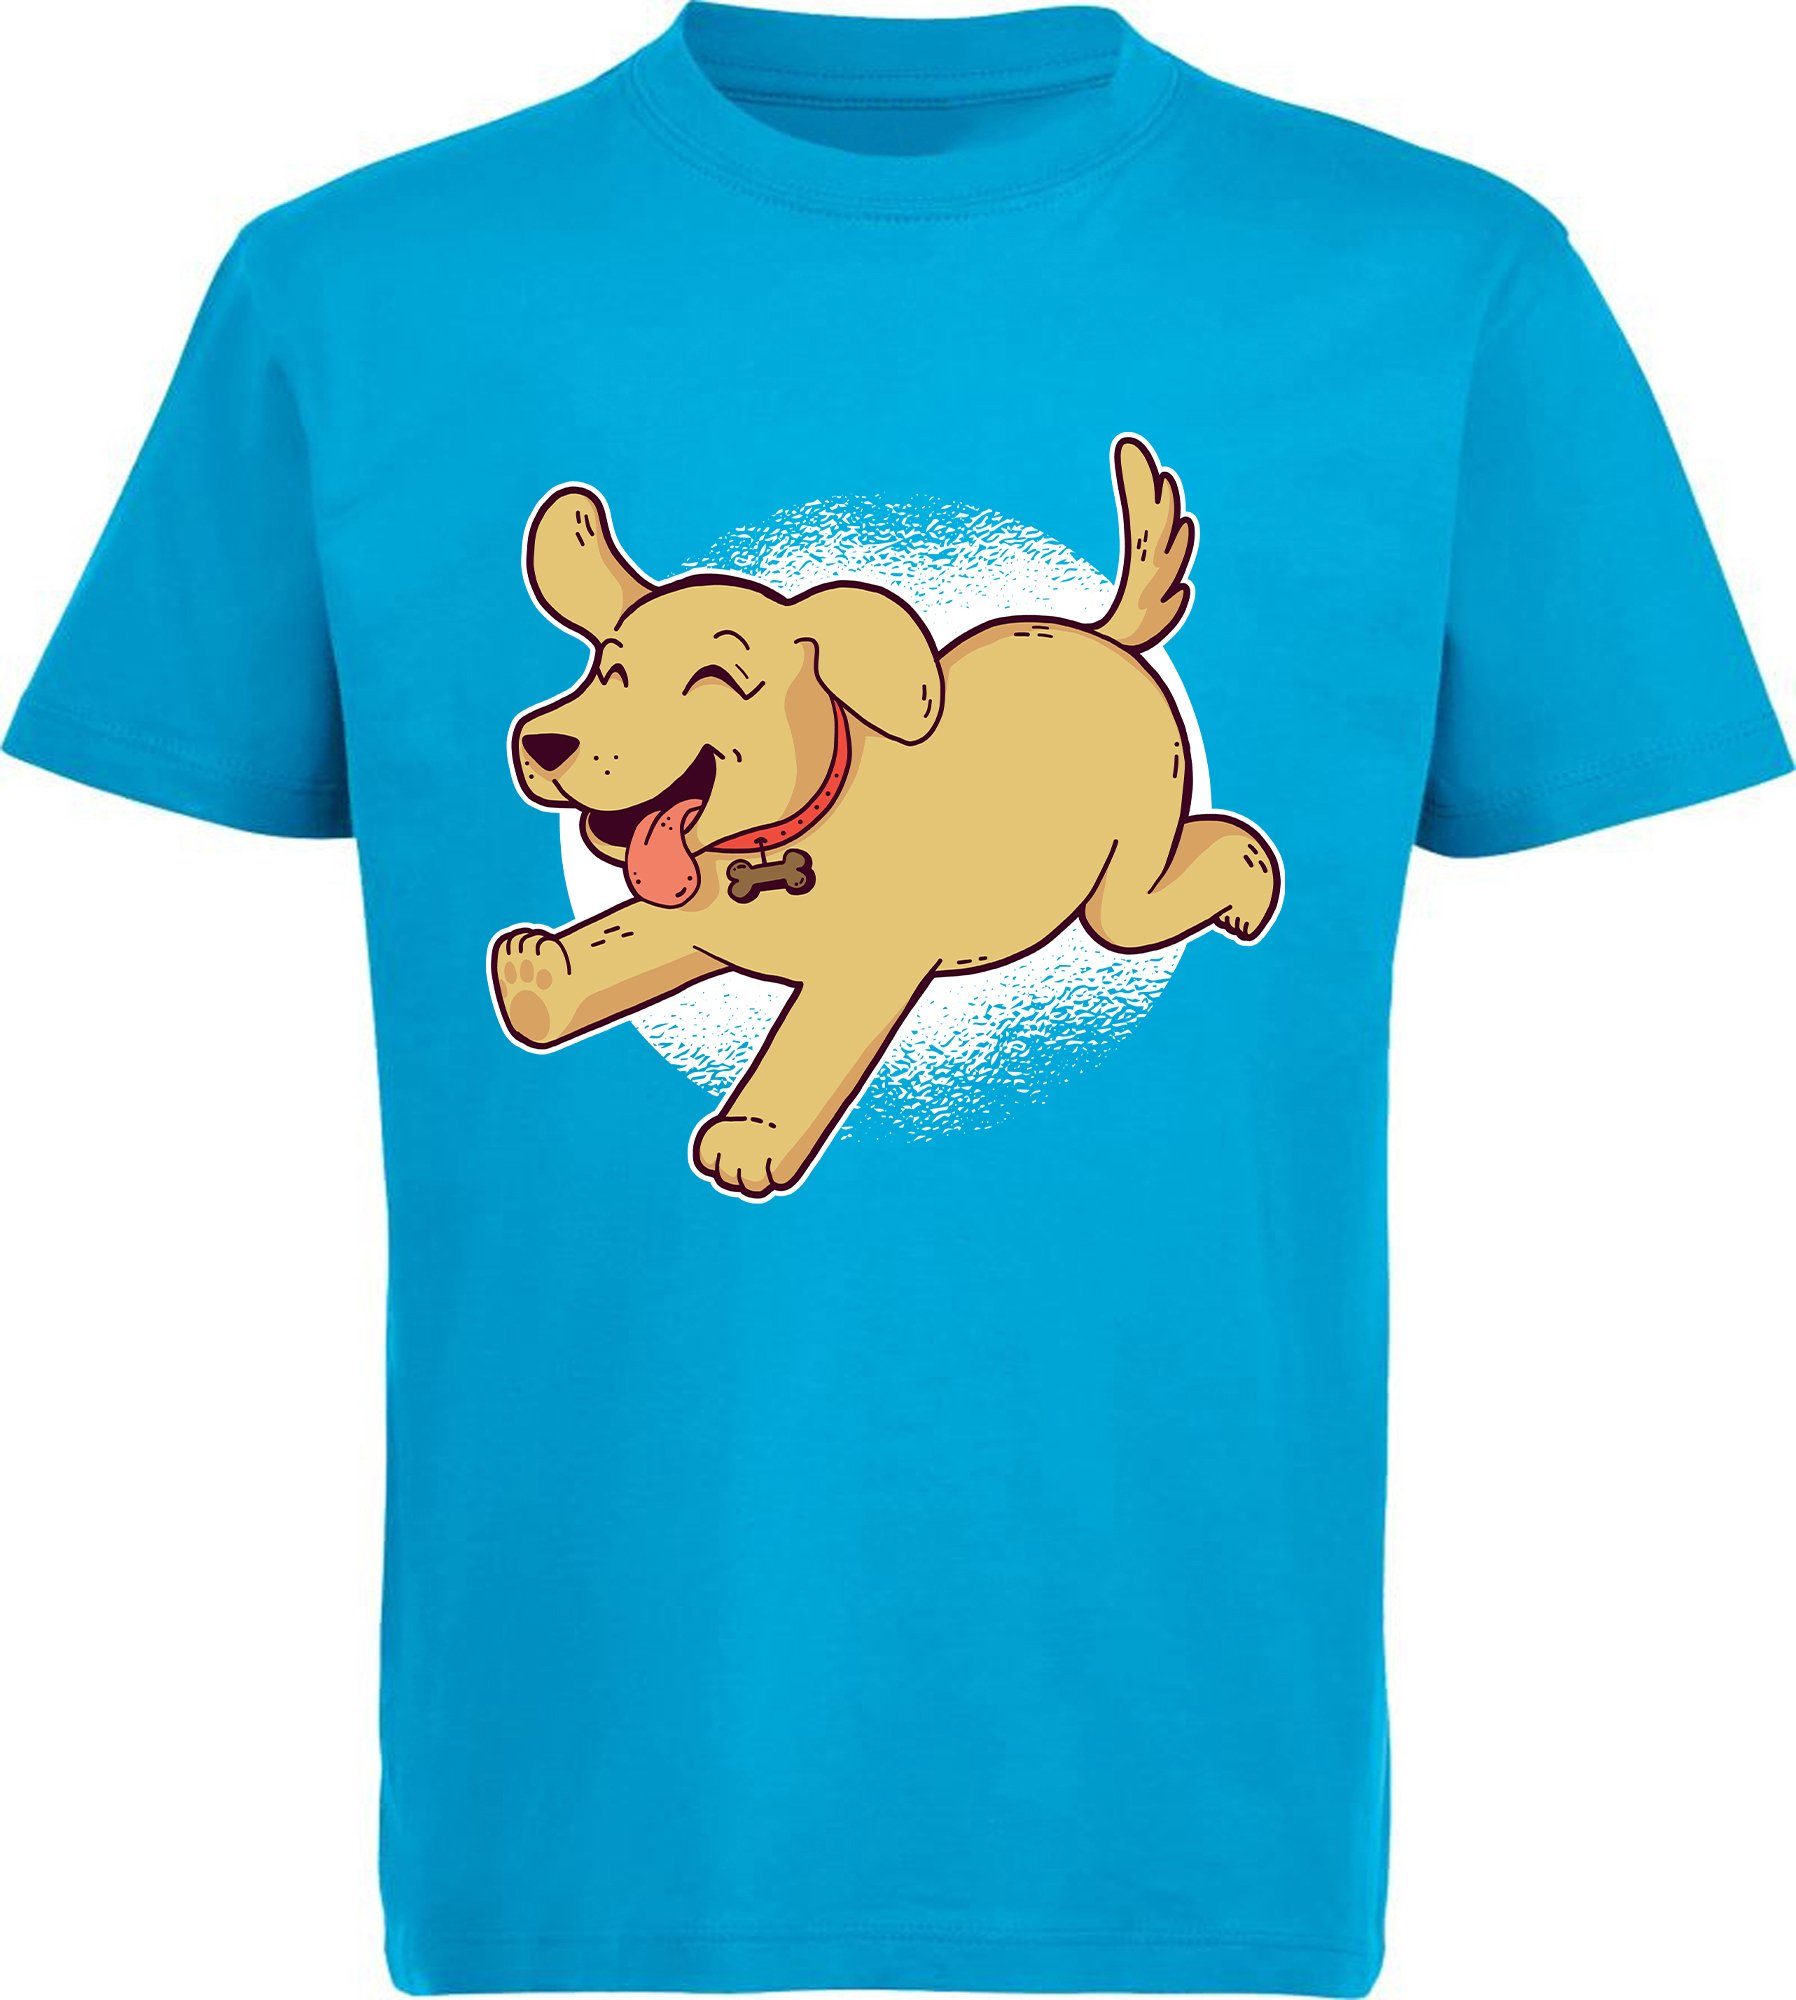 aqua Hunde T-Shirt Kinder bedruckt MyDesign24 Shirt Aufdruck, mit Spielender Labrador i248 blau Welpe - Print Baumwollshirt